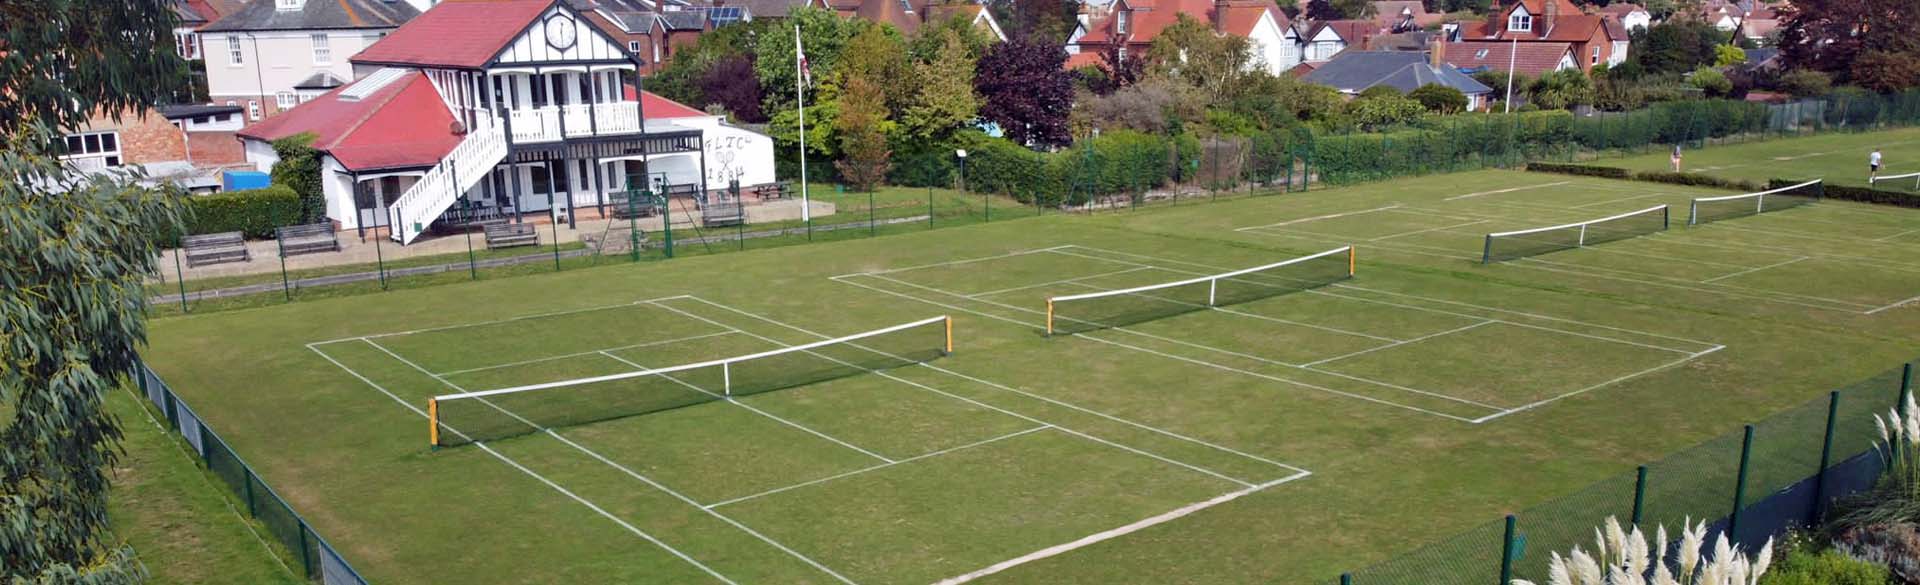 Felixstowe Lawn Tennis Club Aerial Photo